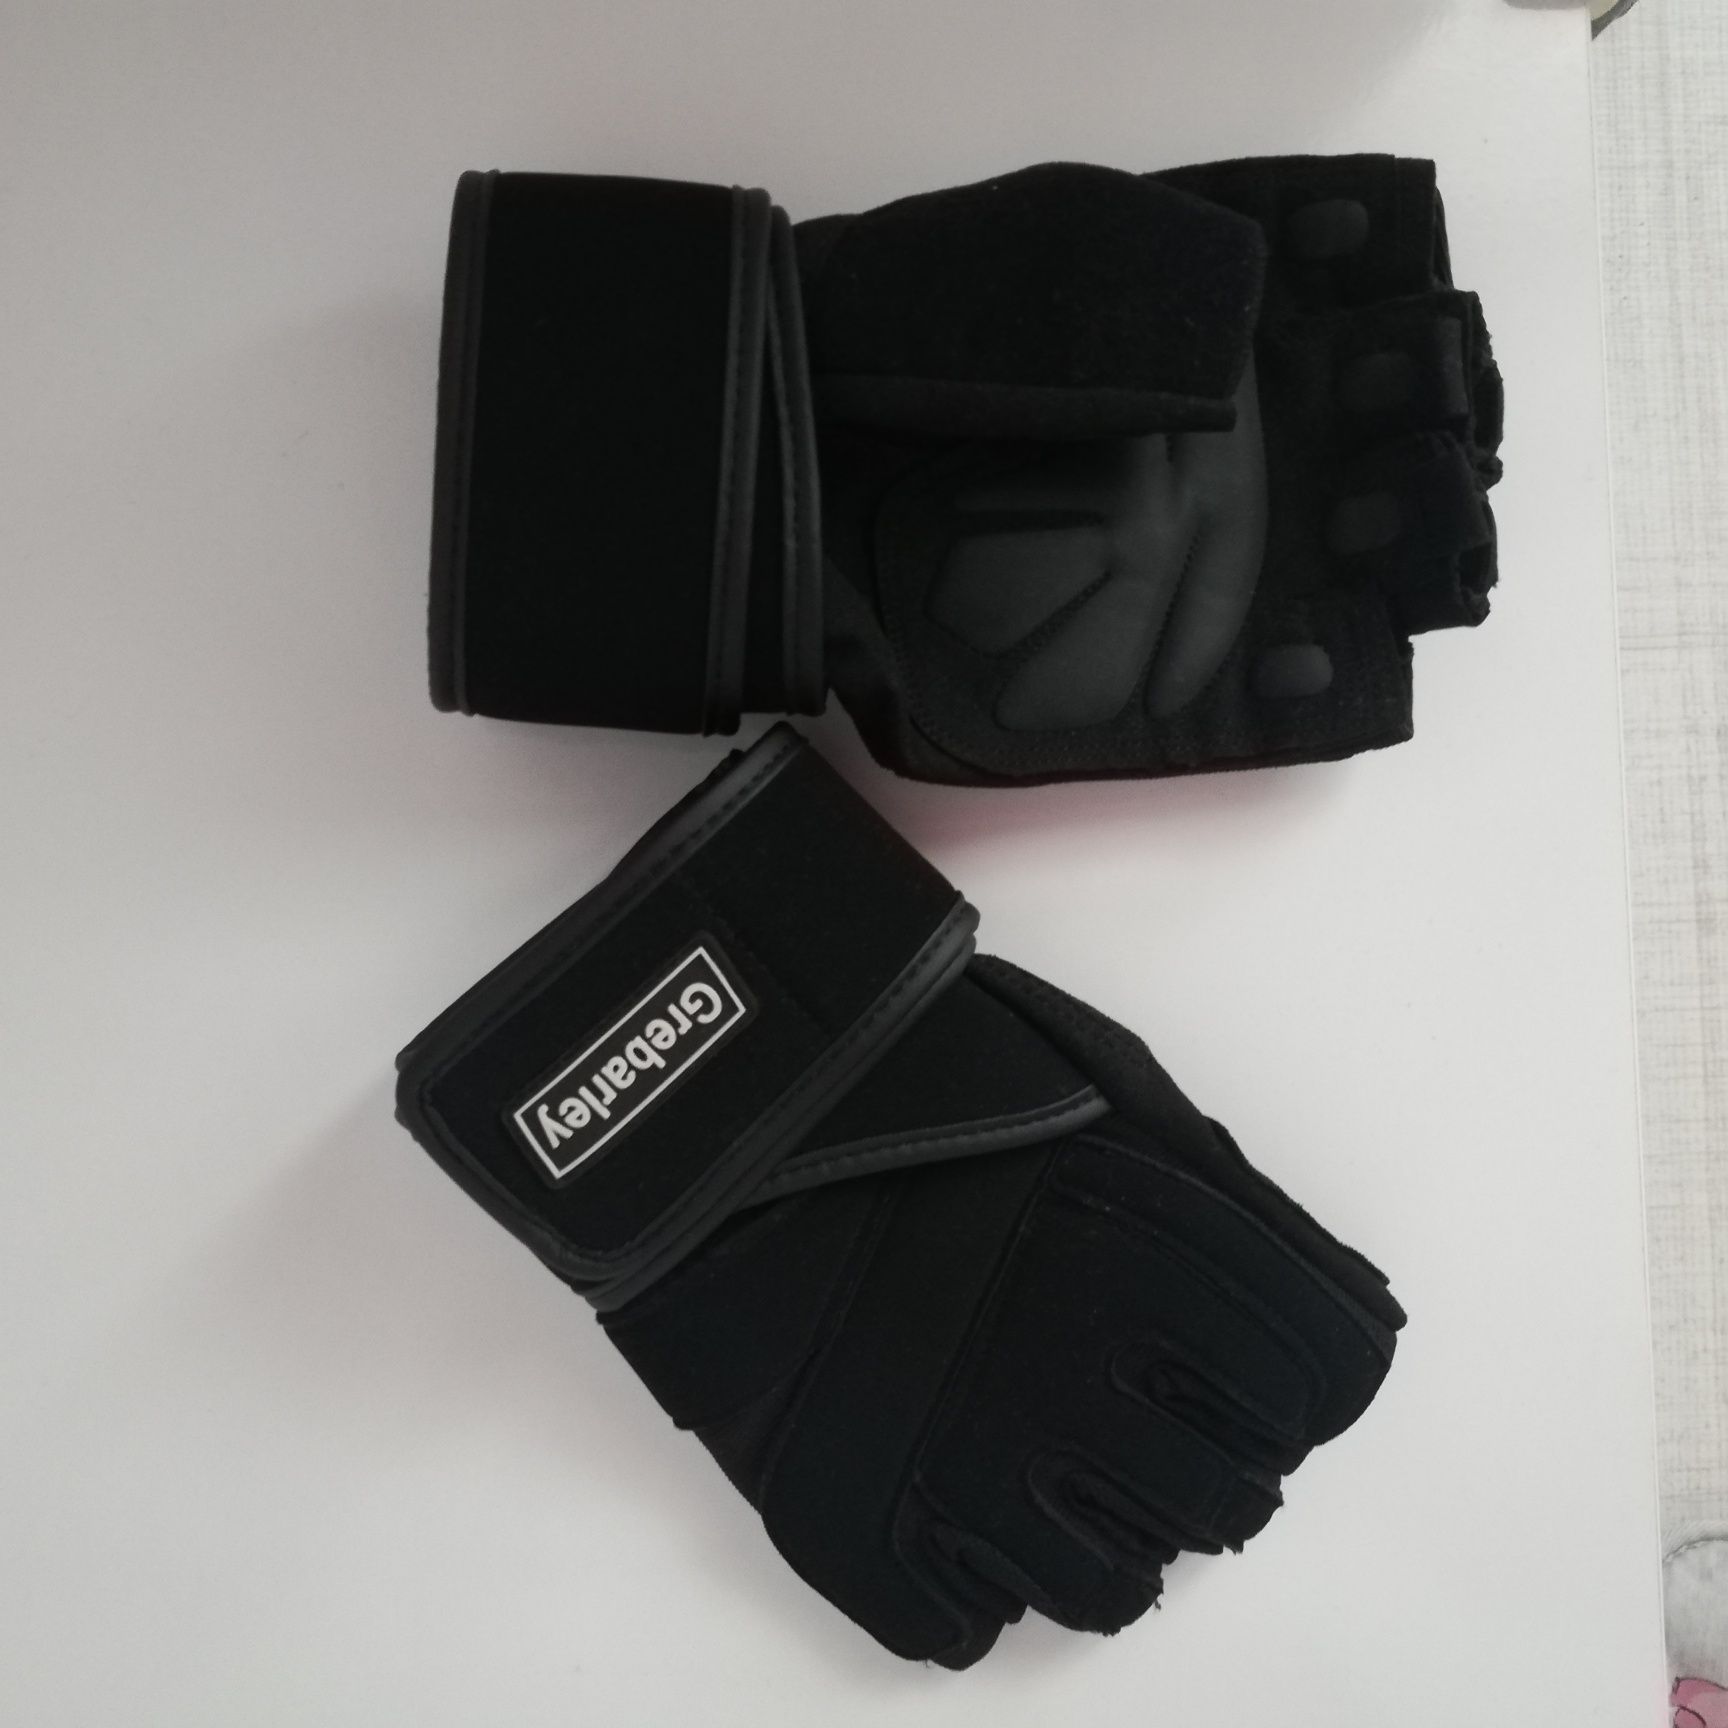 Ръкавици за фитнес Grebarley